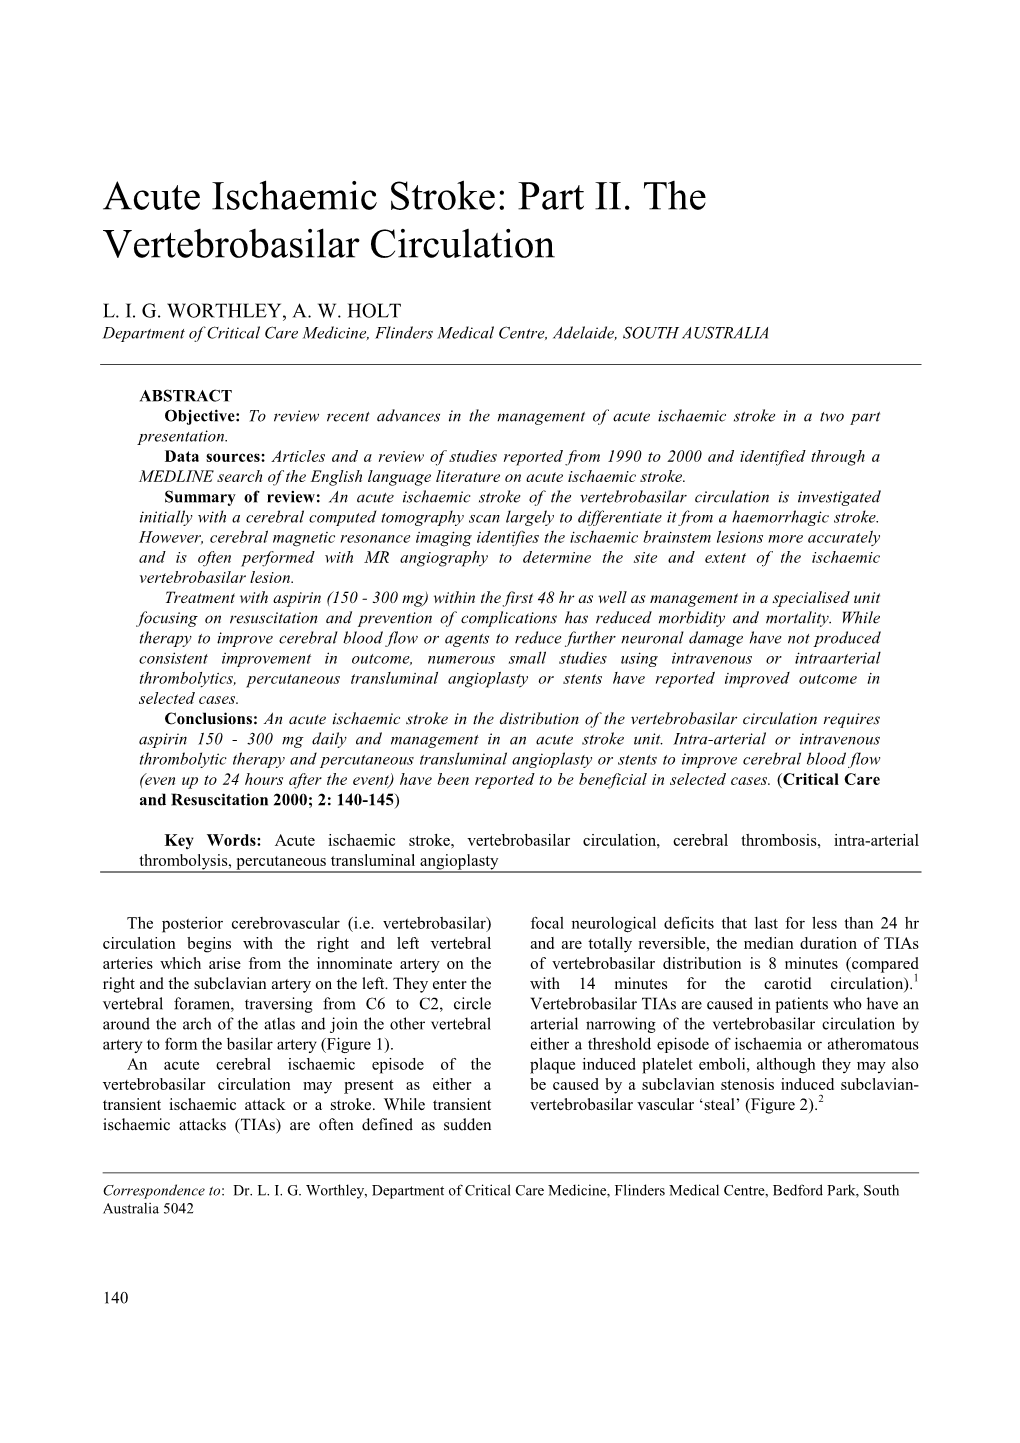 Acute Ischaemic Stroke: Part II. the Vertebrobasilar Circulation